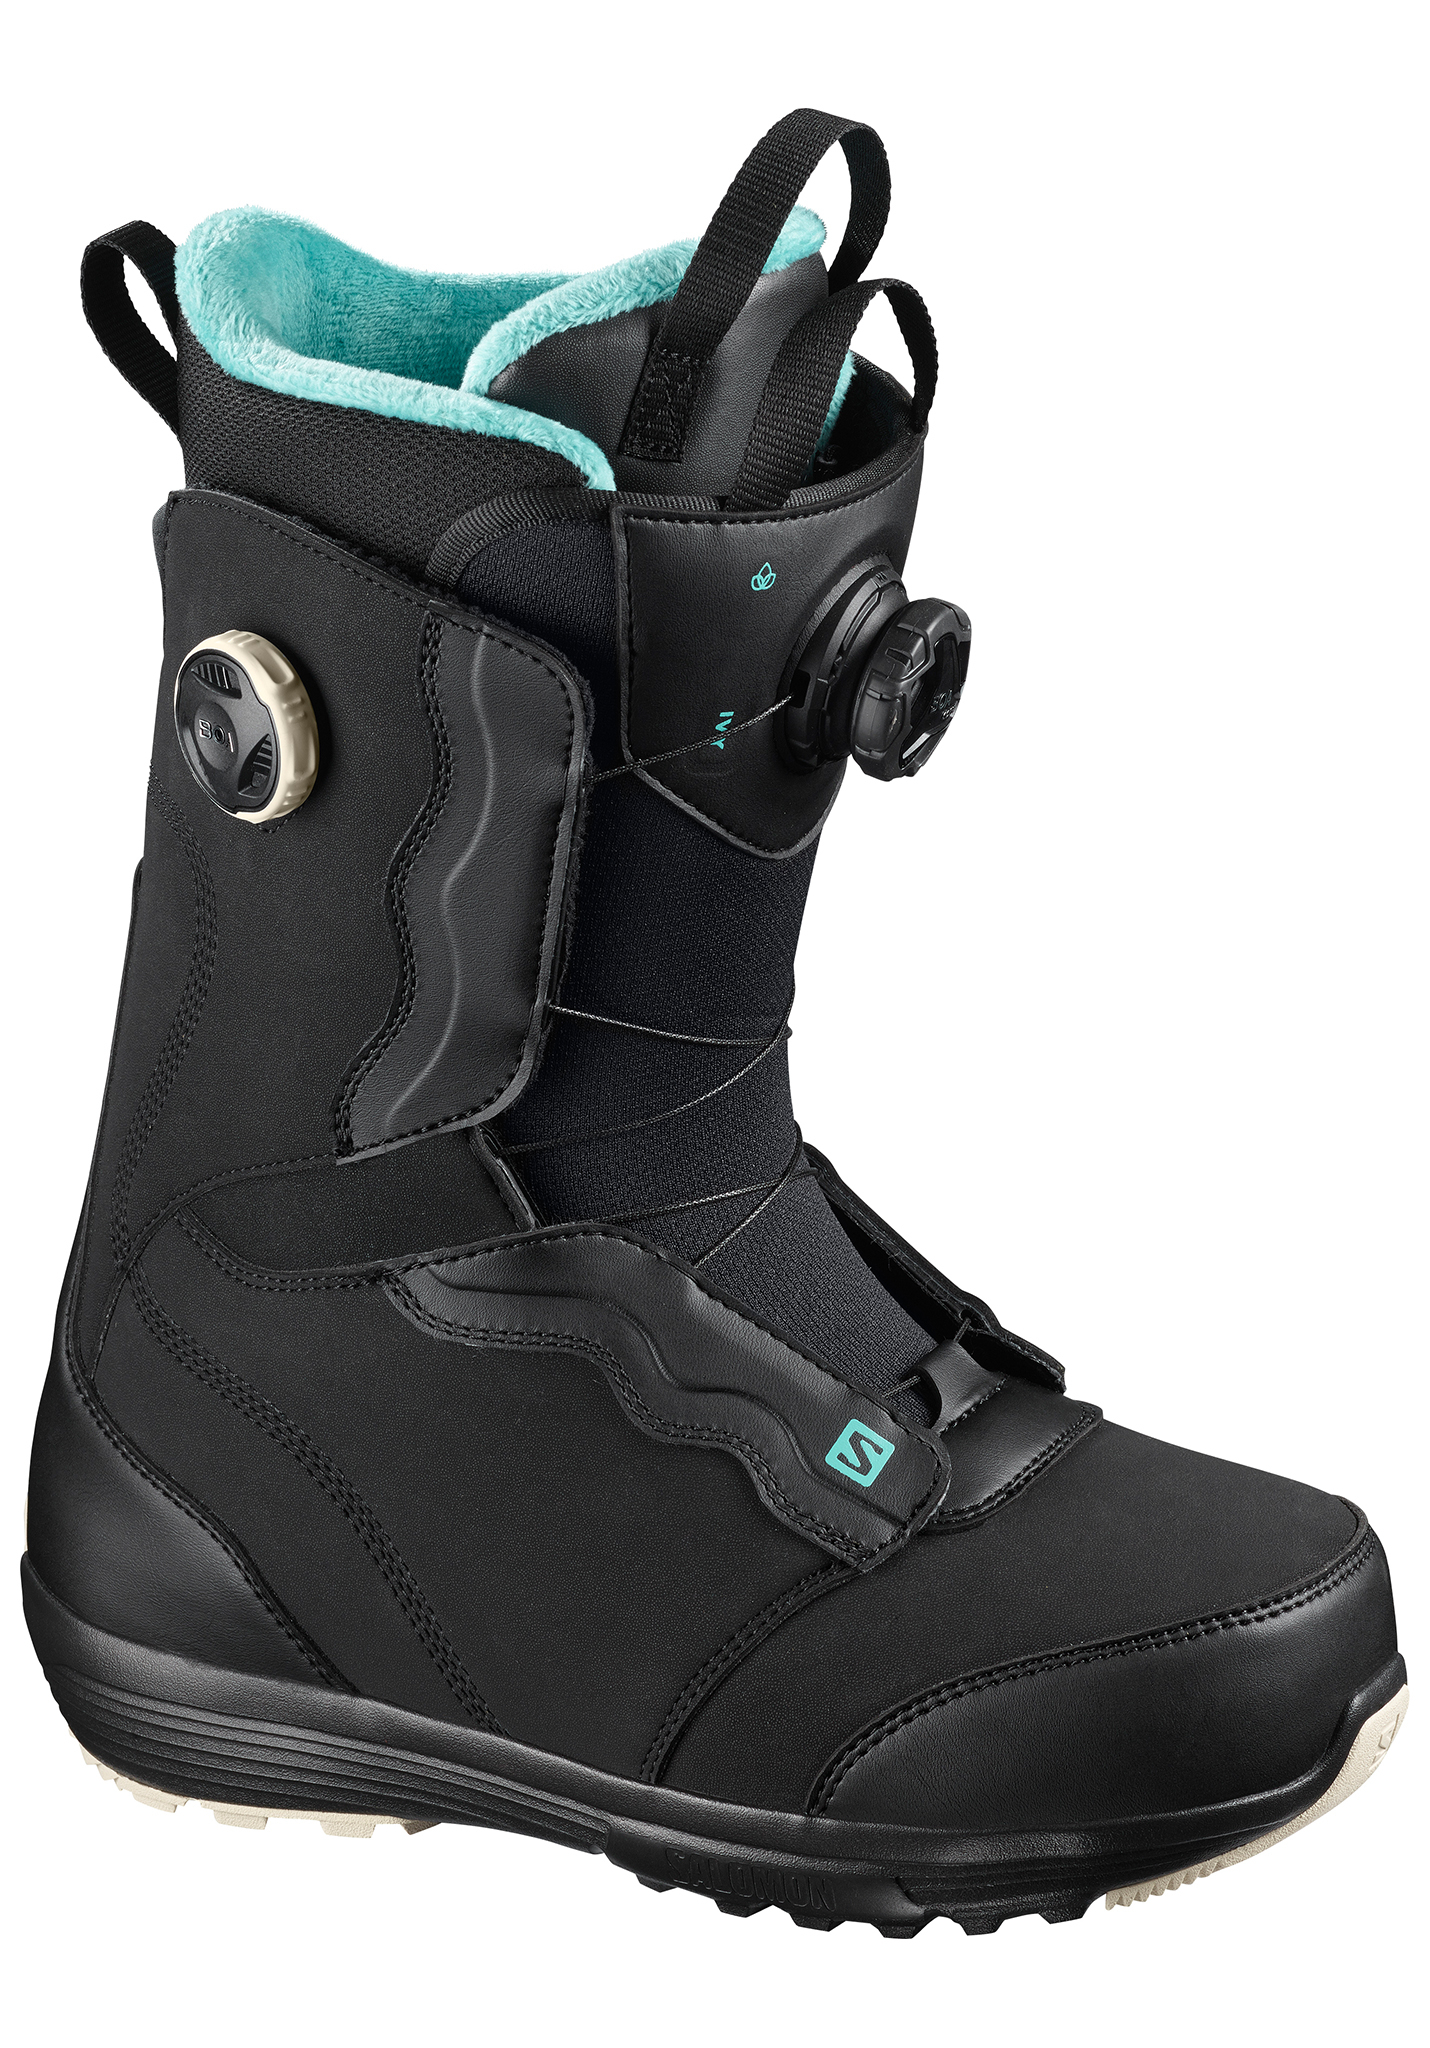 Salomon Ivy Boa SJ Boa Snowboard Boots schwarz/schwarz/meadowbrook 38,5